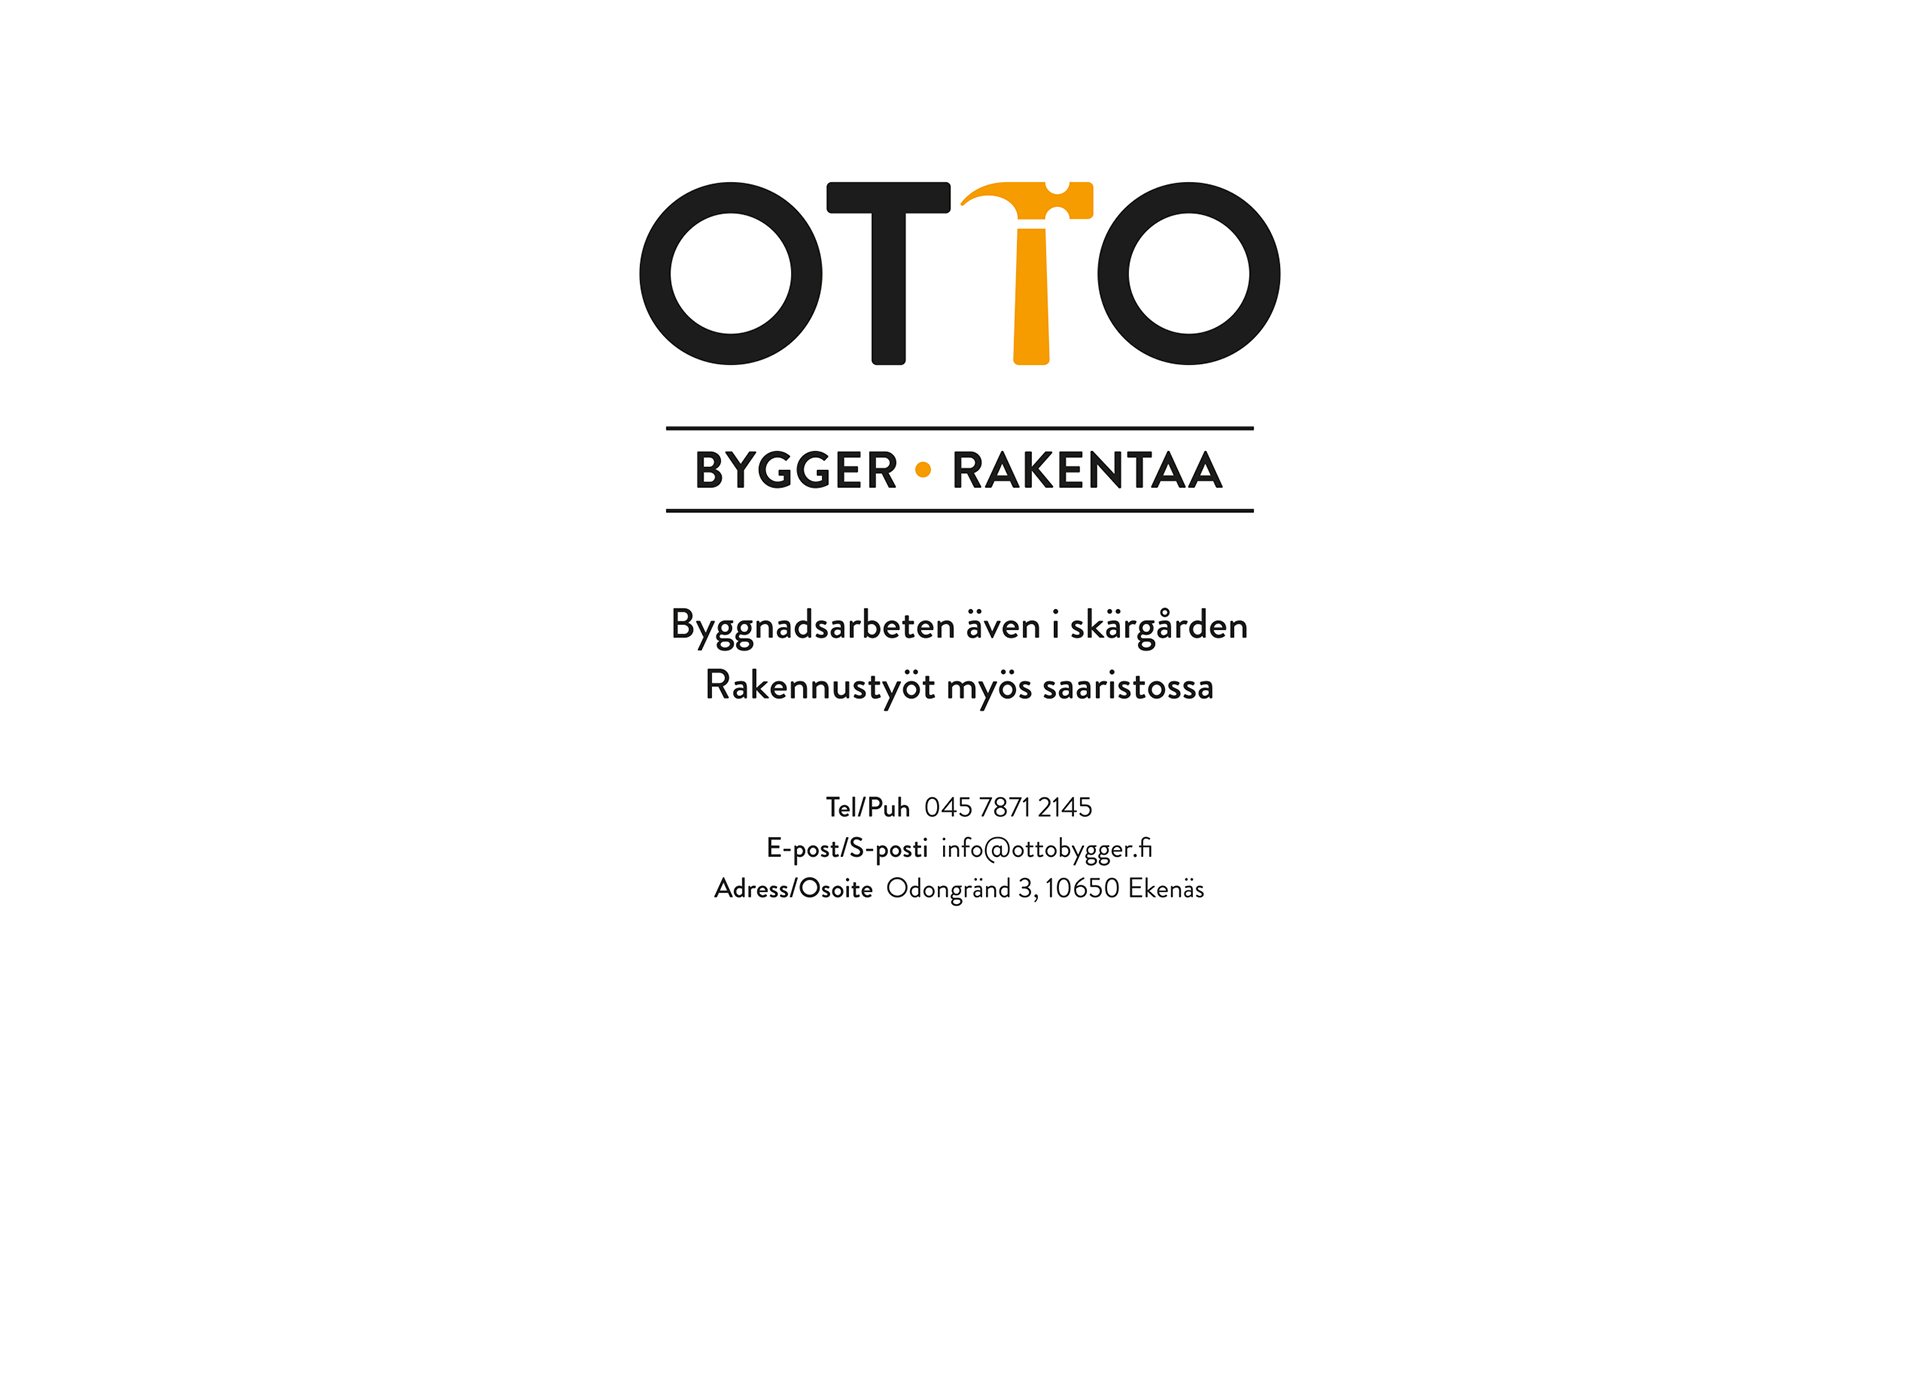 Screenshot for ottorakentaa.fi